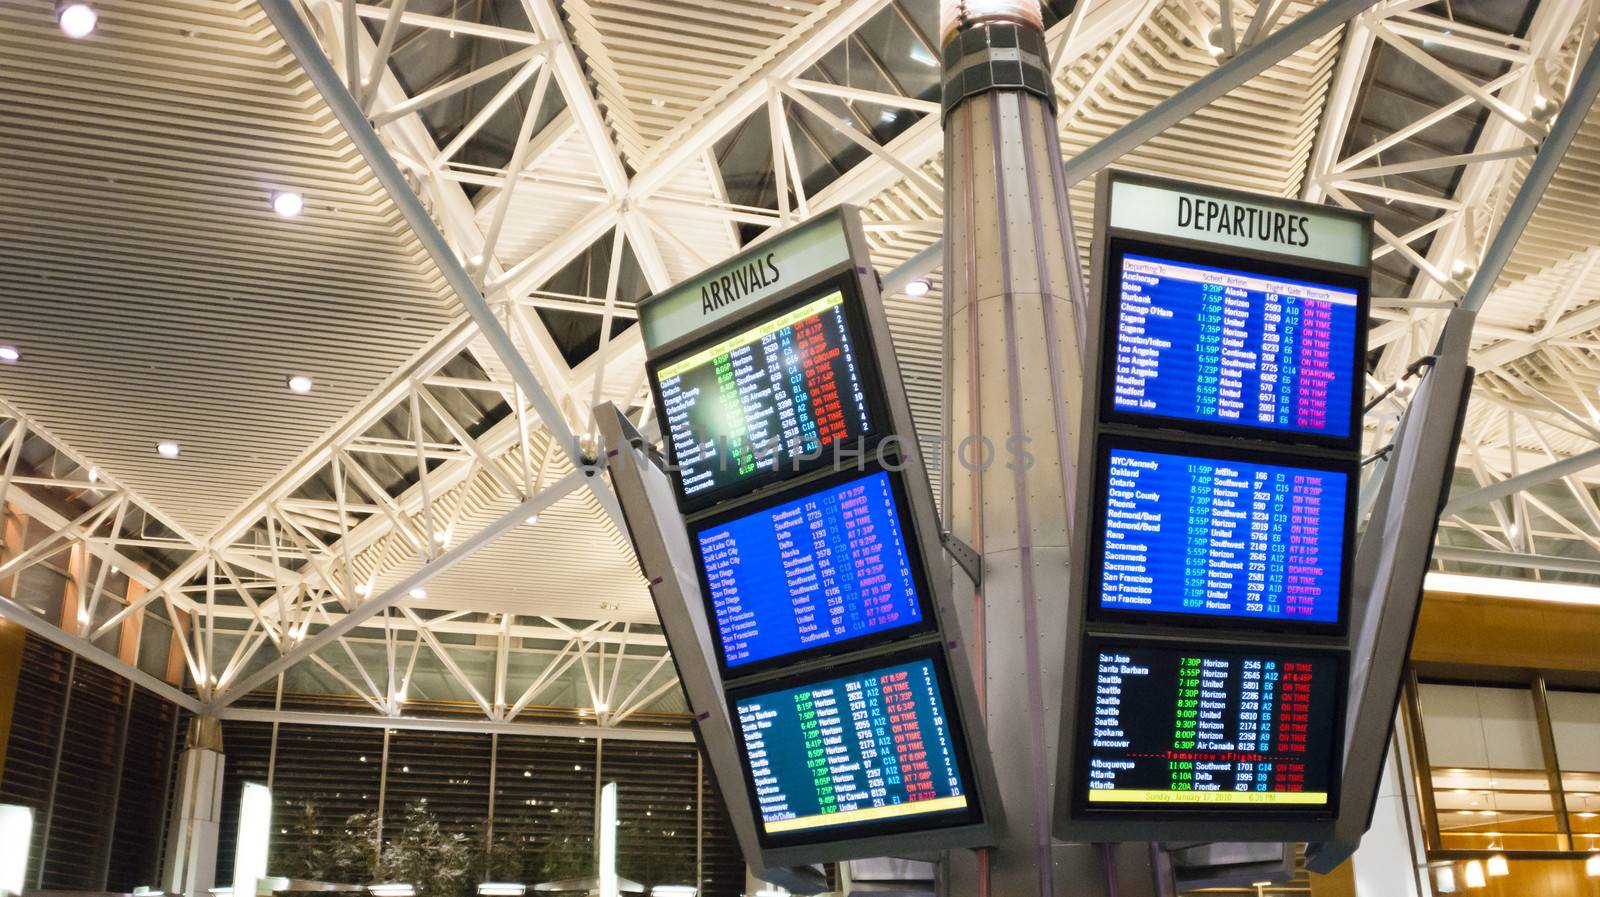 Inside Local Airport Information Center Arrivals Departures Large Lighted Informational Sign